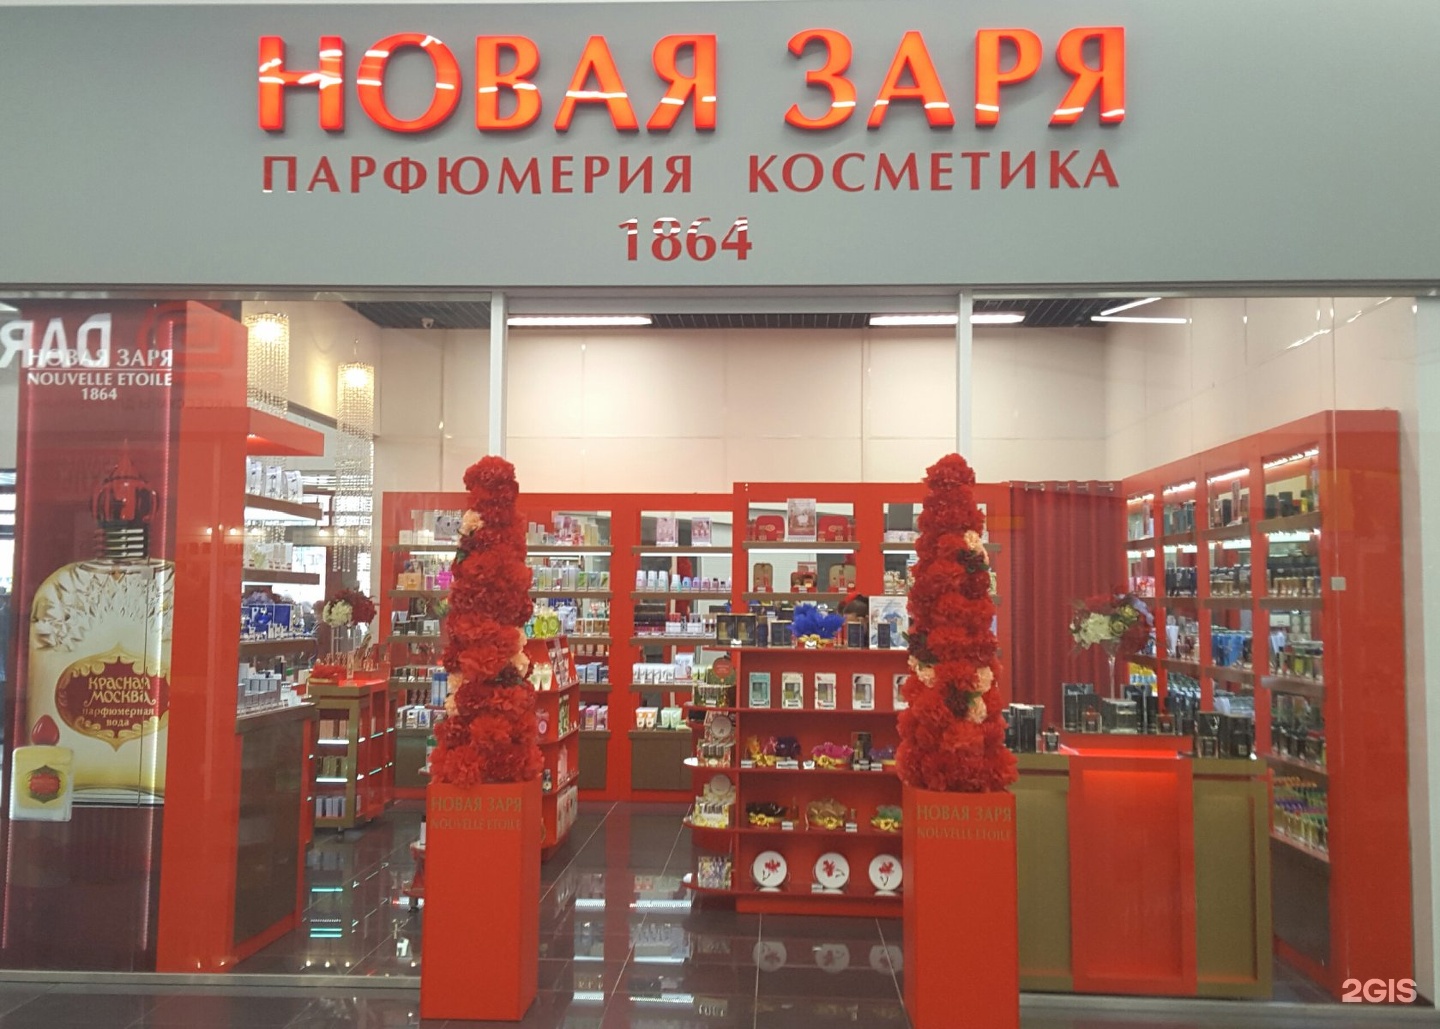 Интернет Магазин Фабрики Москва